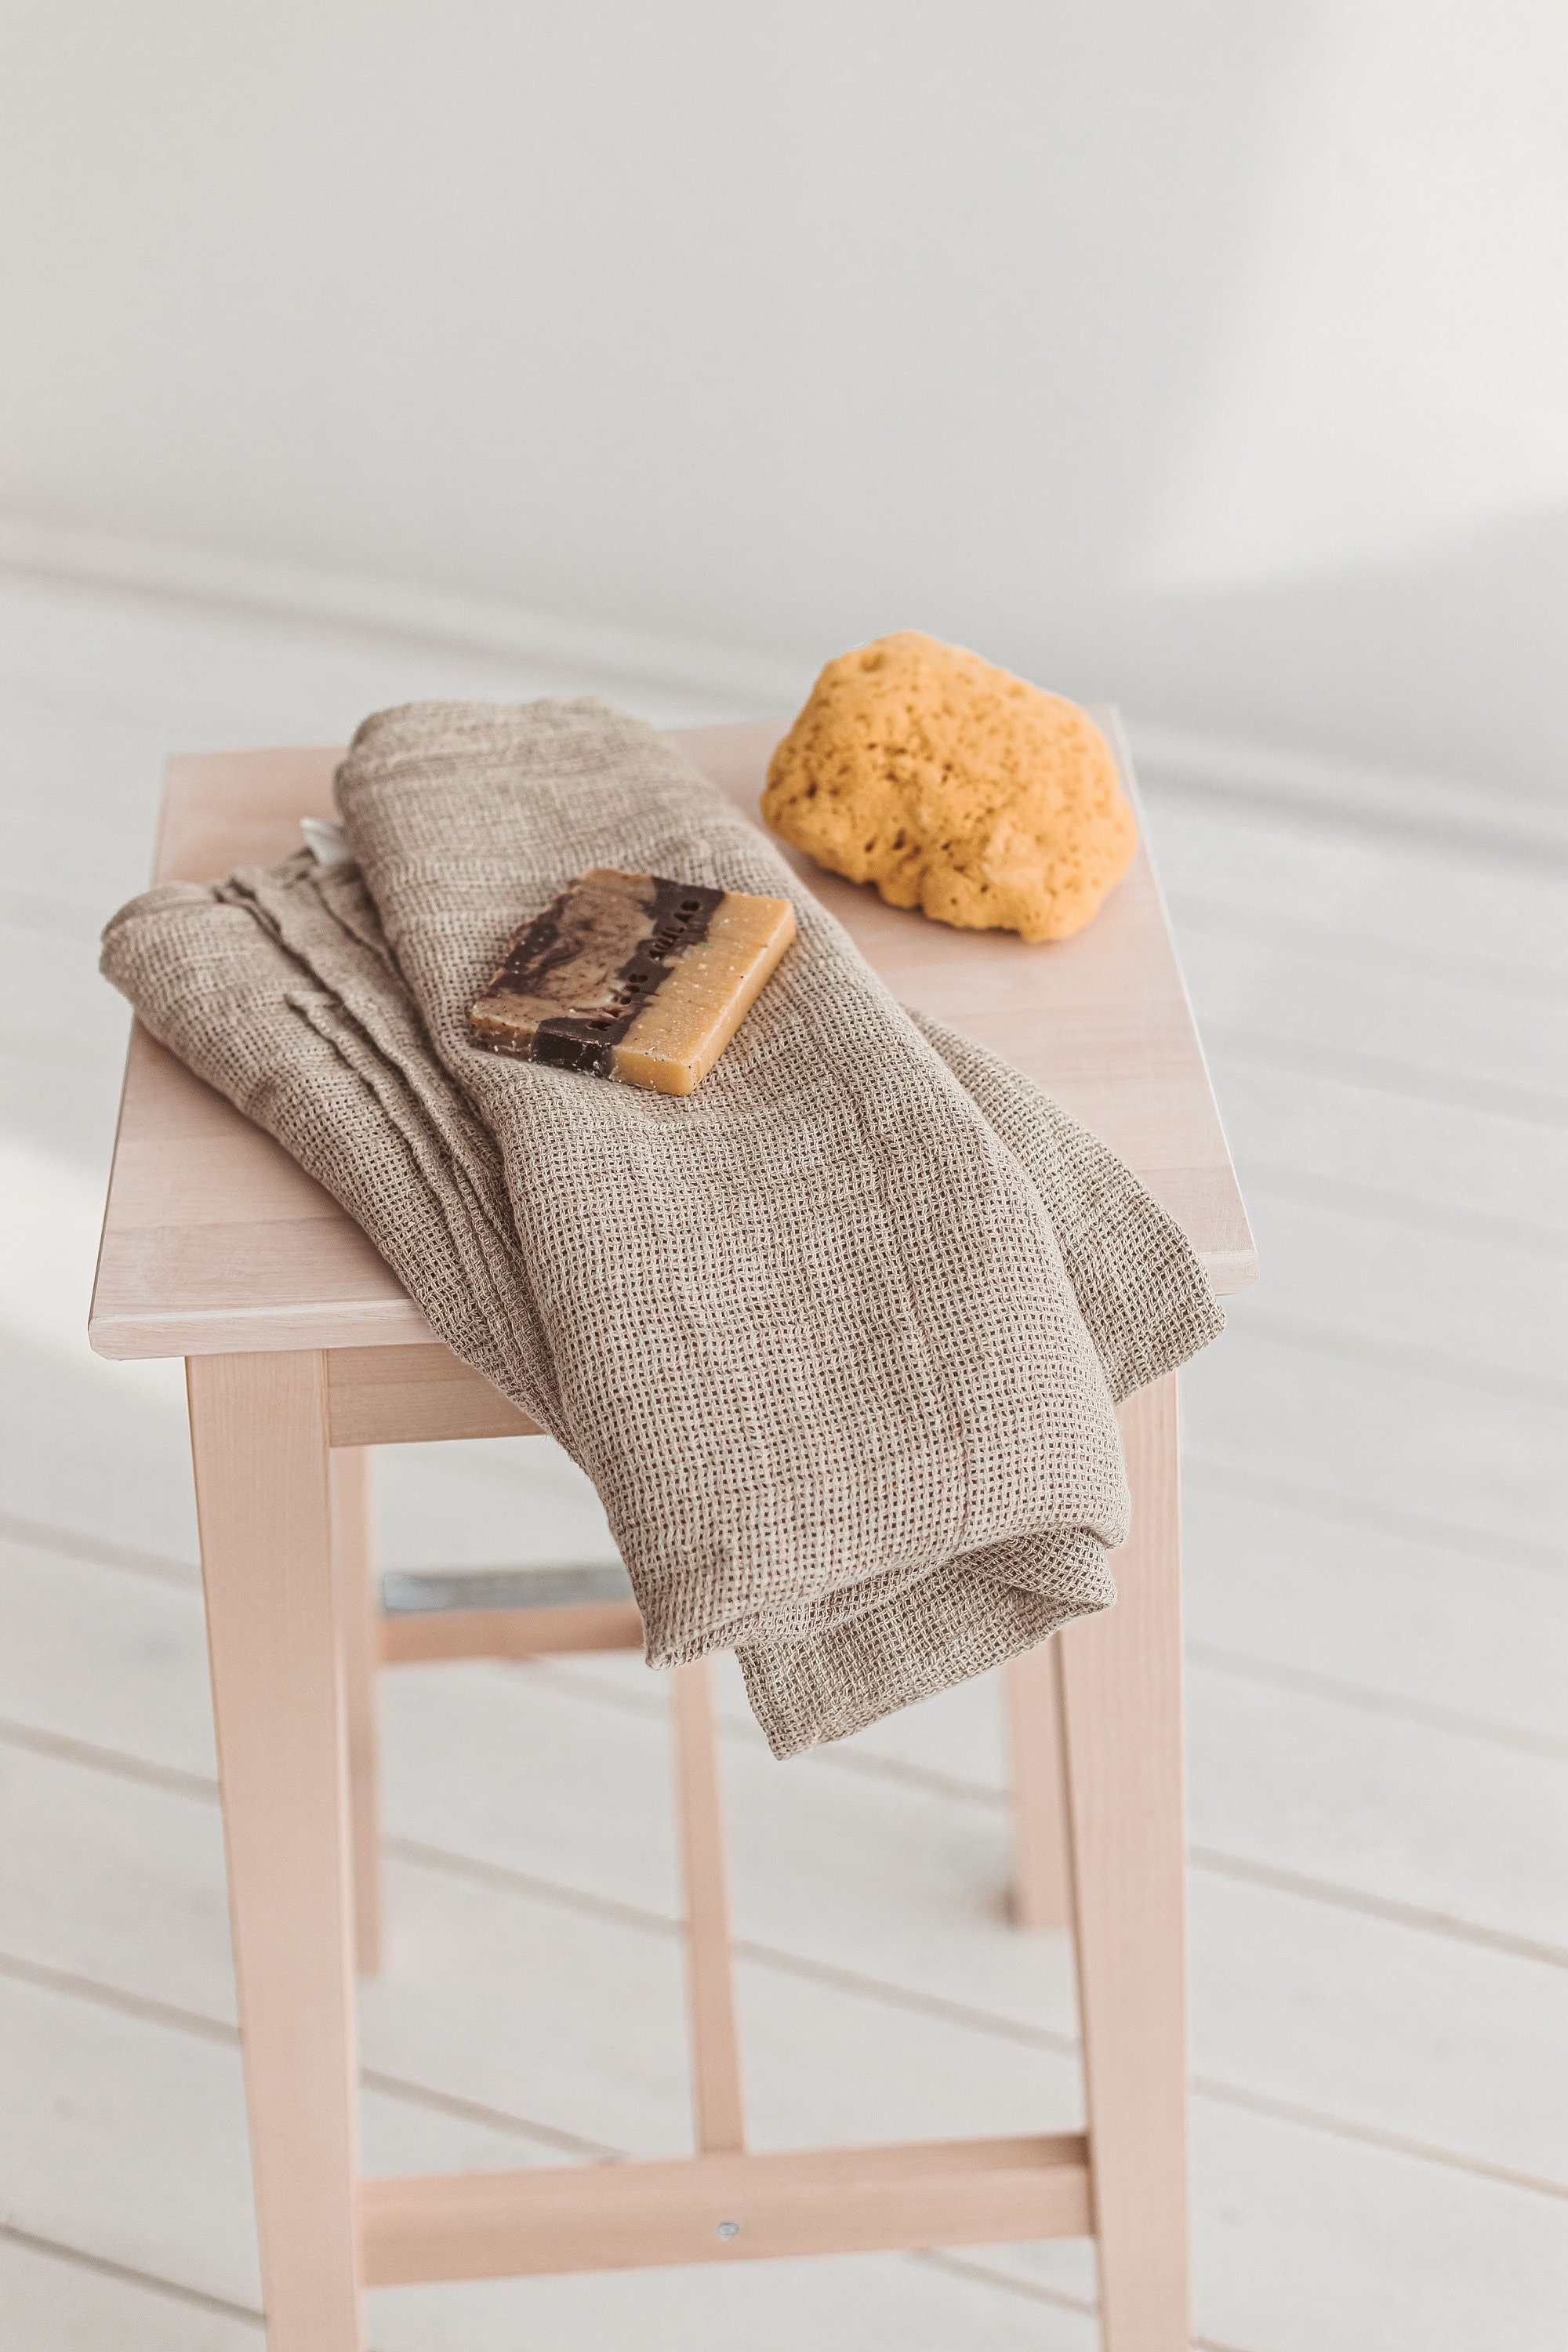 Natural Linen Towel Large Throw Towel Plaid Bath Towels Bath Sheets Pre  Washed Throw Sauna Towel Beach Sheet Gift Linen Towel Flat Sheet 